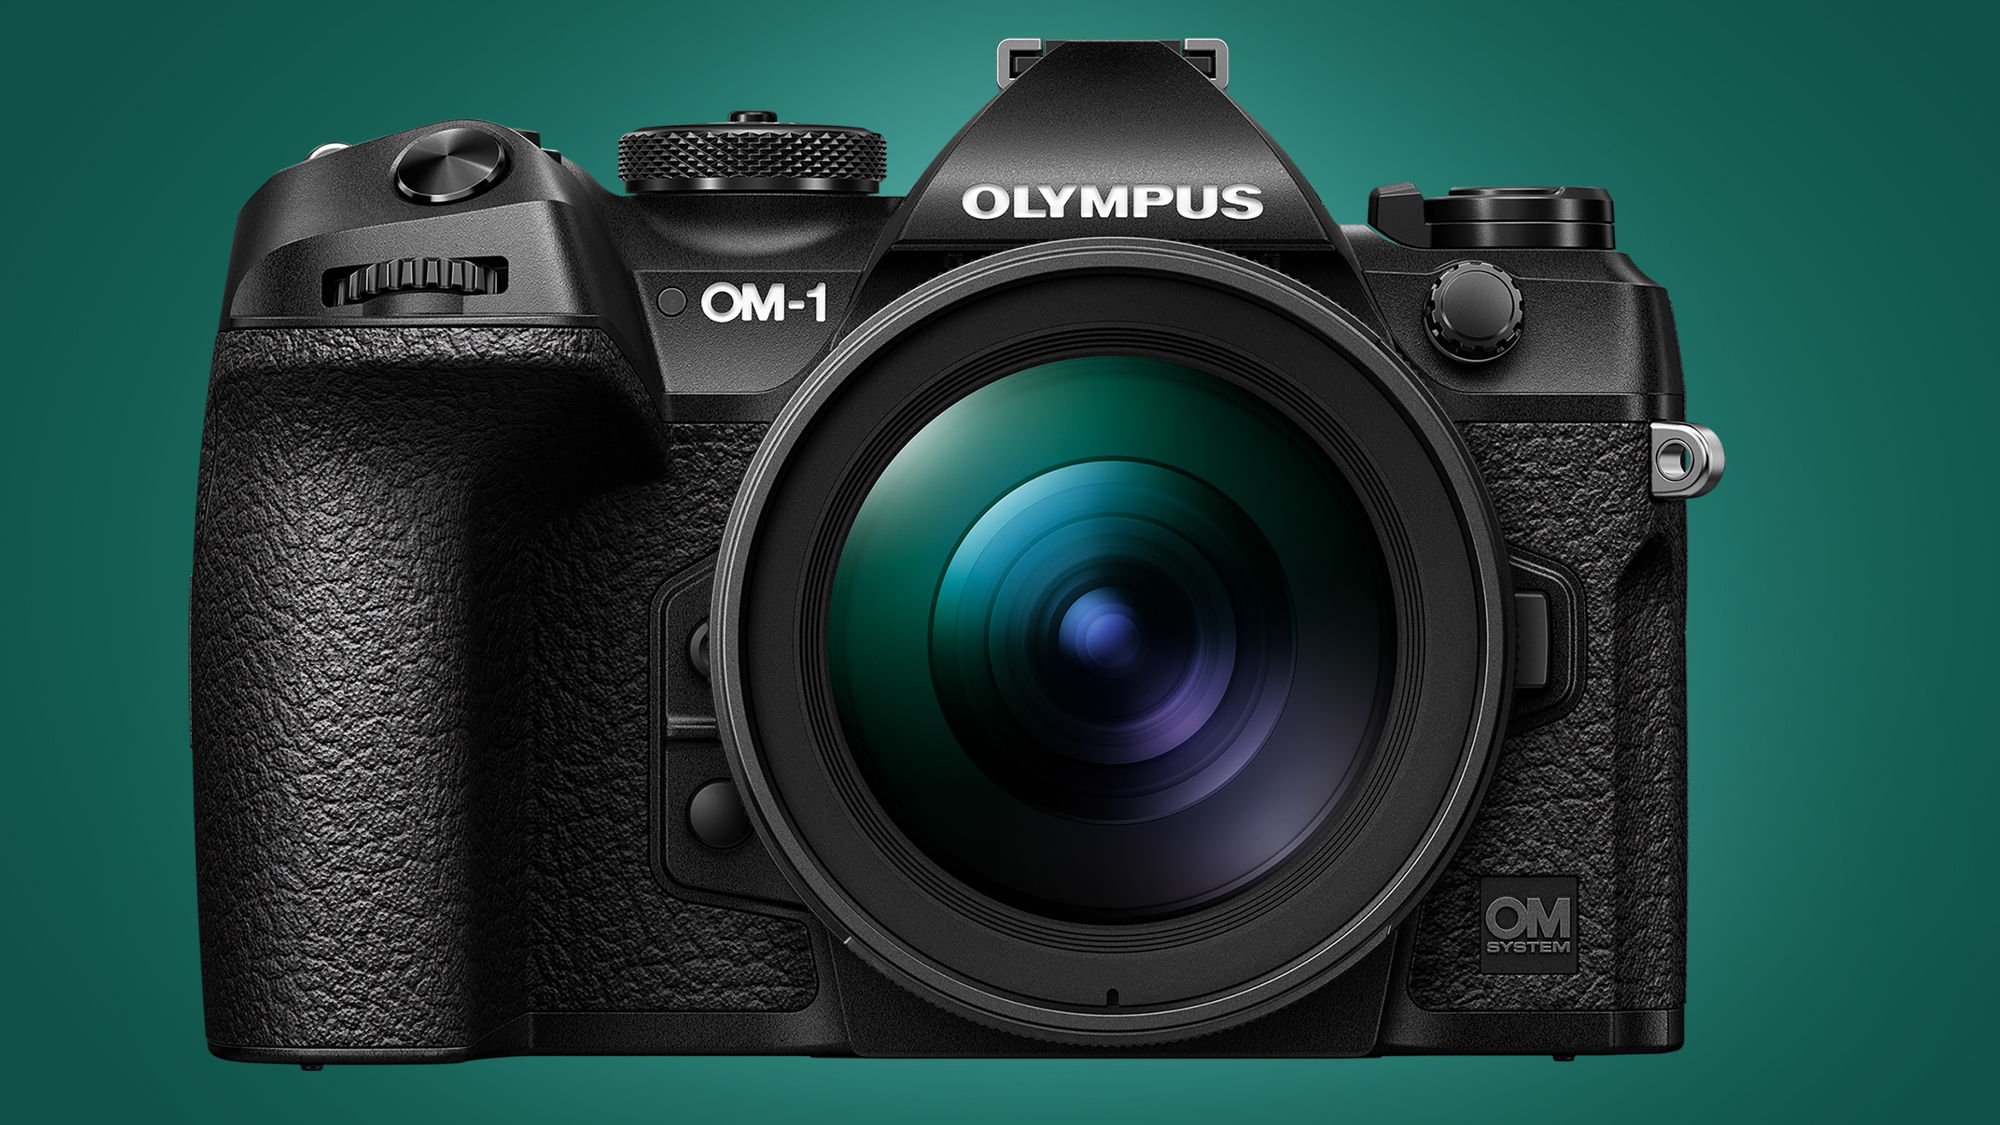 Olympus OM-1 camera on a green background